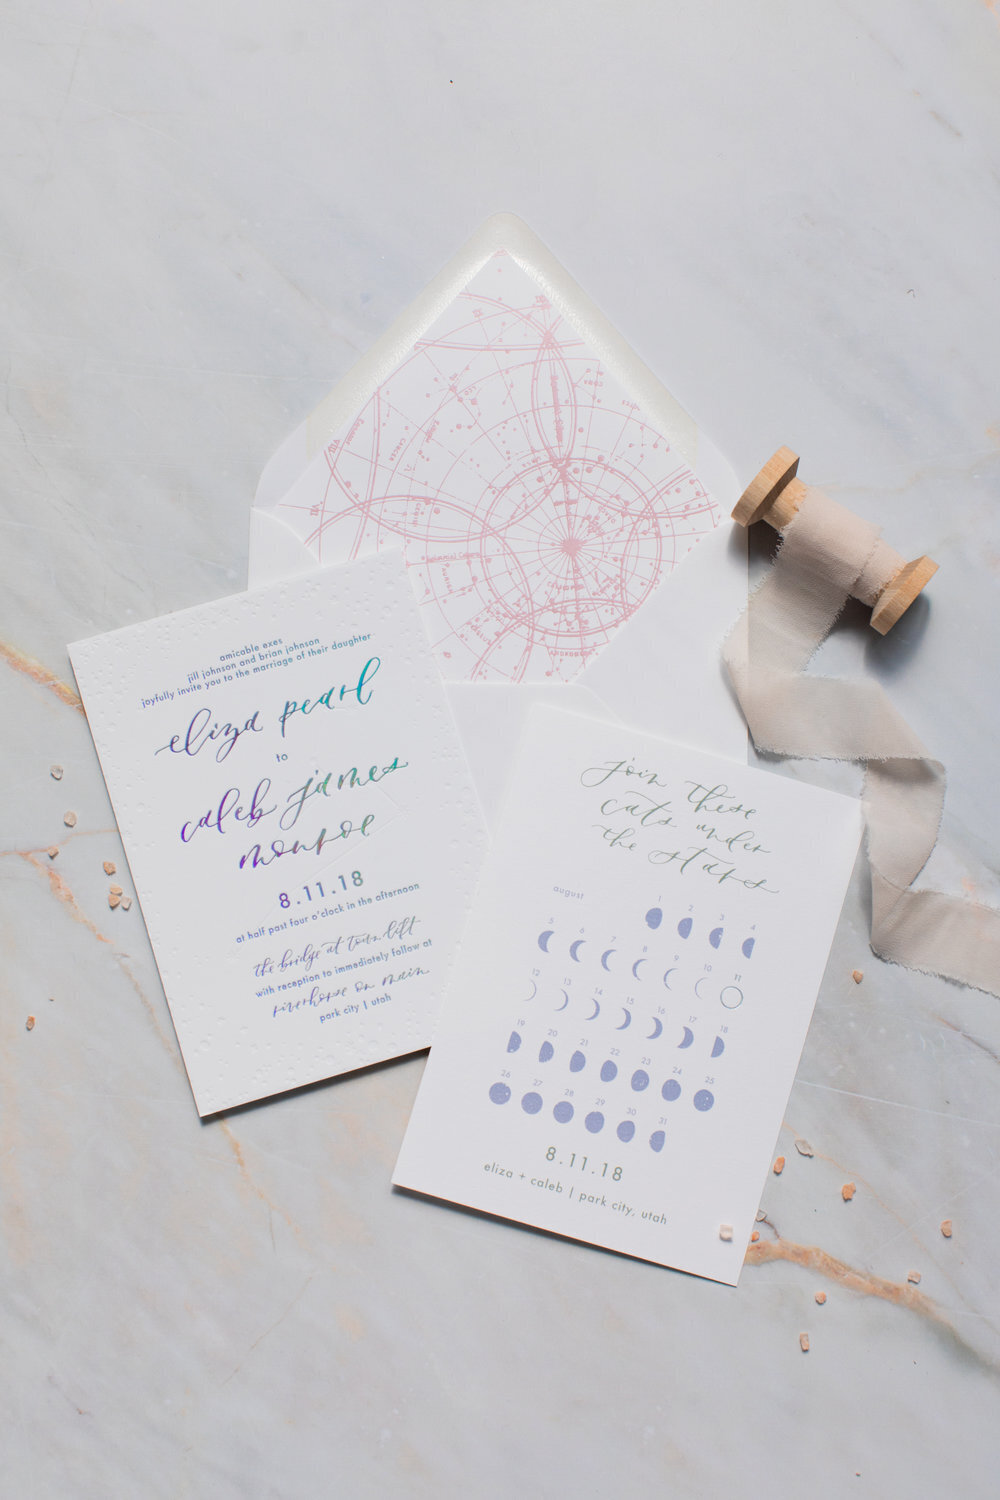 Celestial+wedding+invitations+save+the+dates